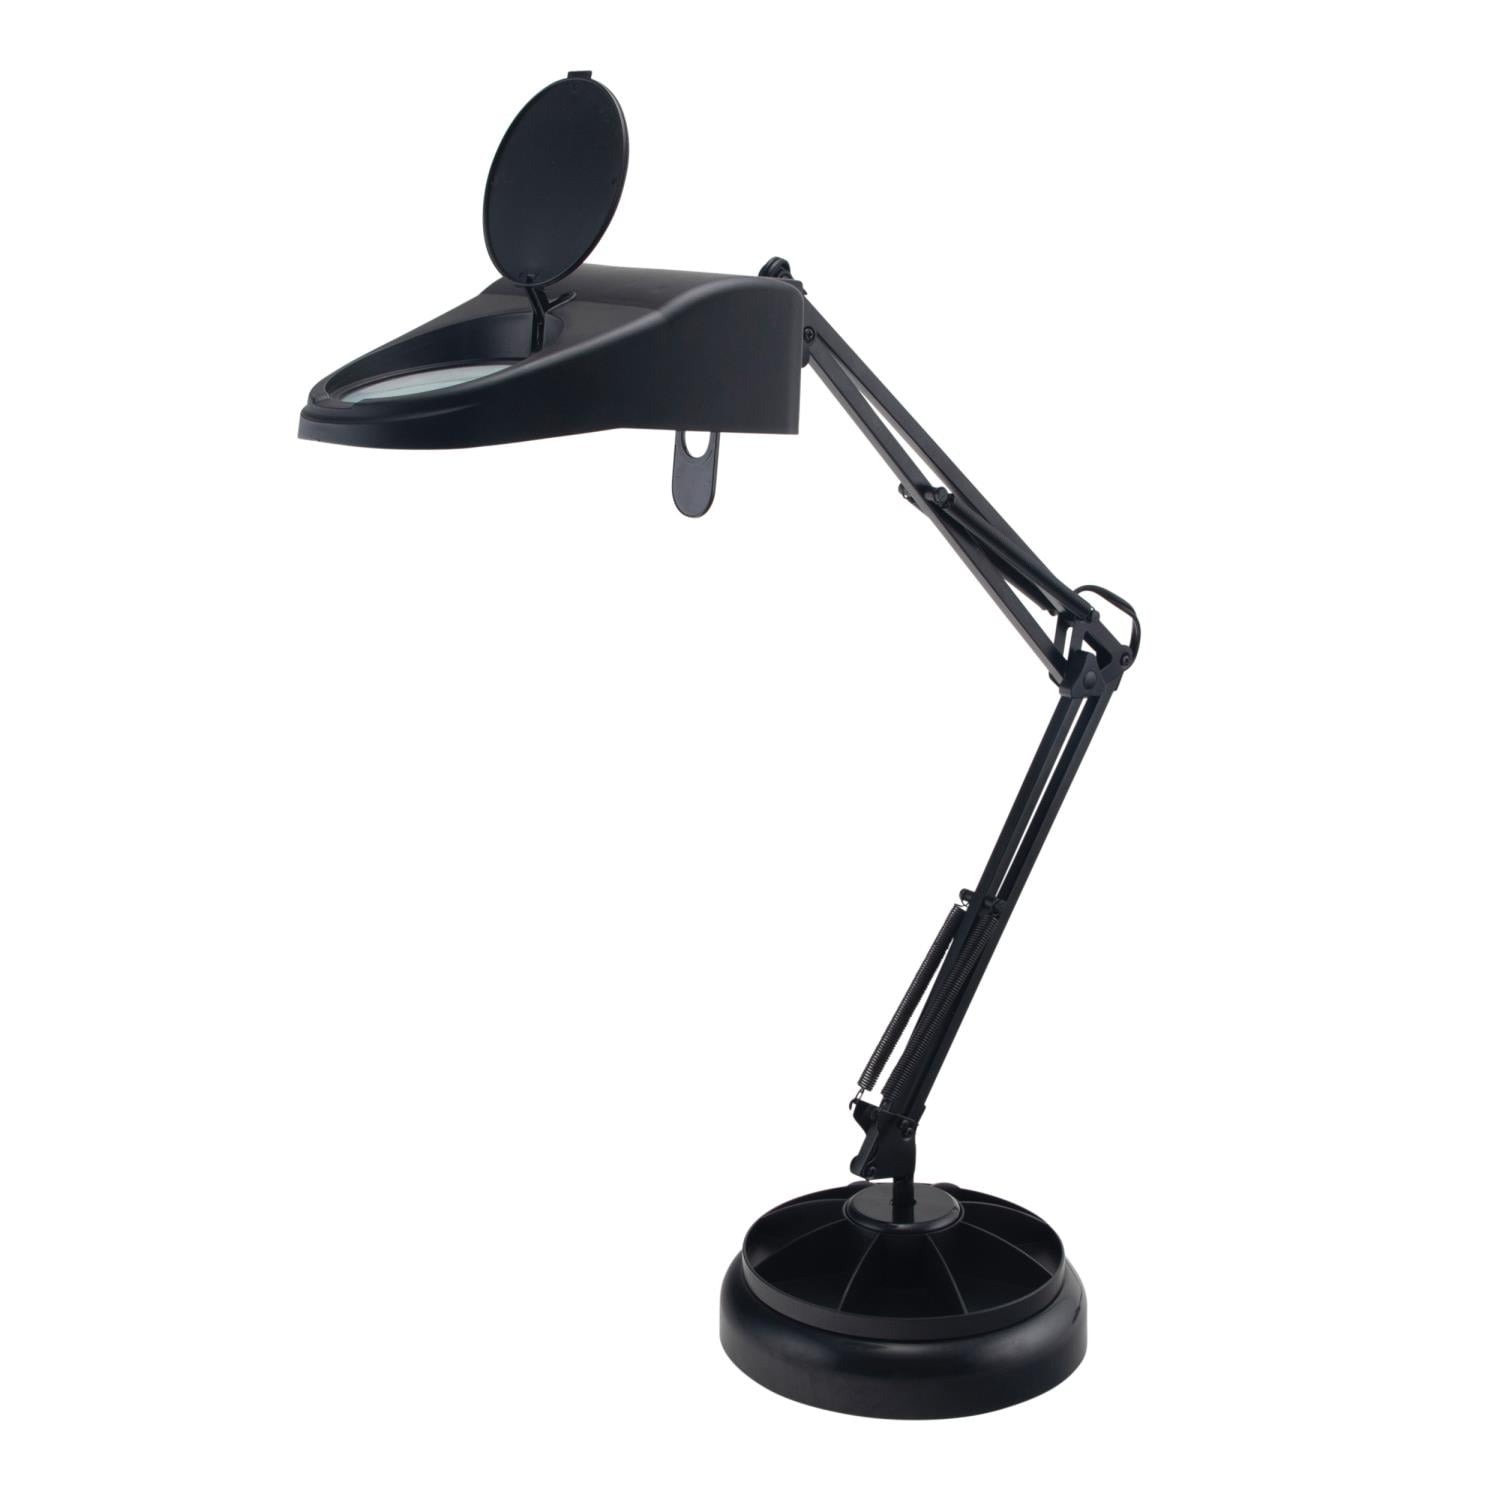 VTECH magnifier with led, magnifier desk lamp, magnifier lamp